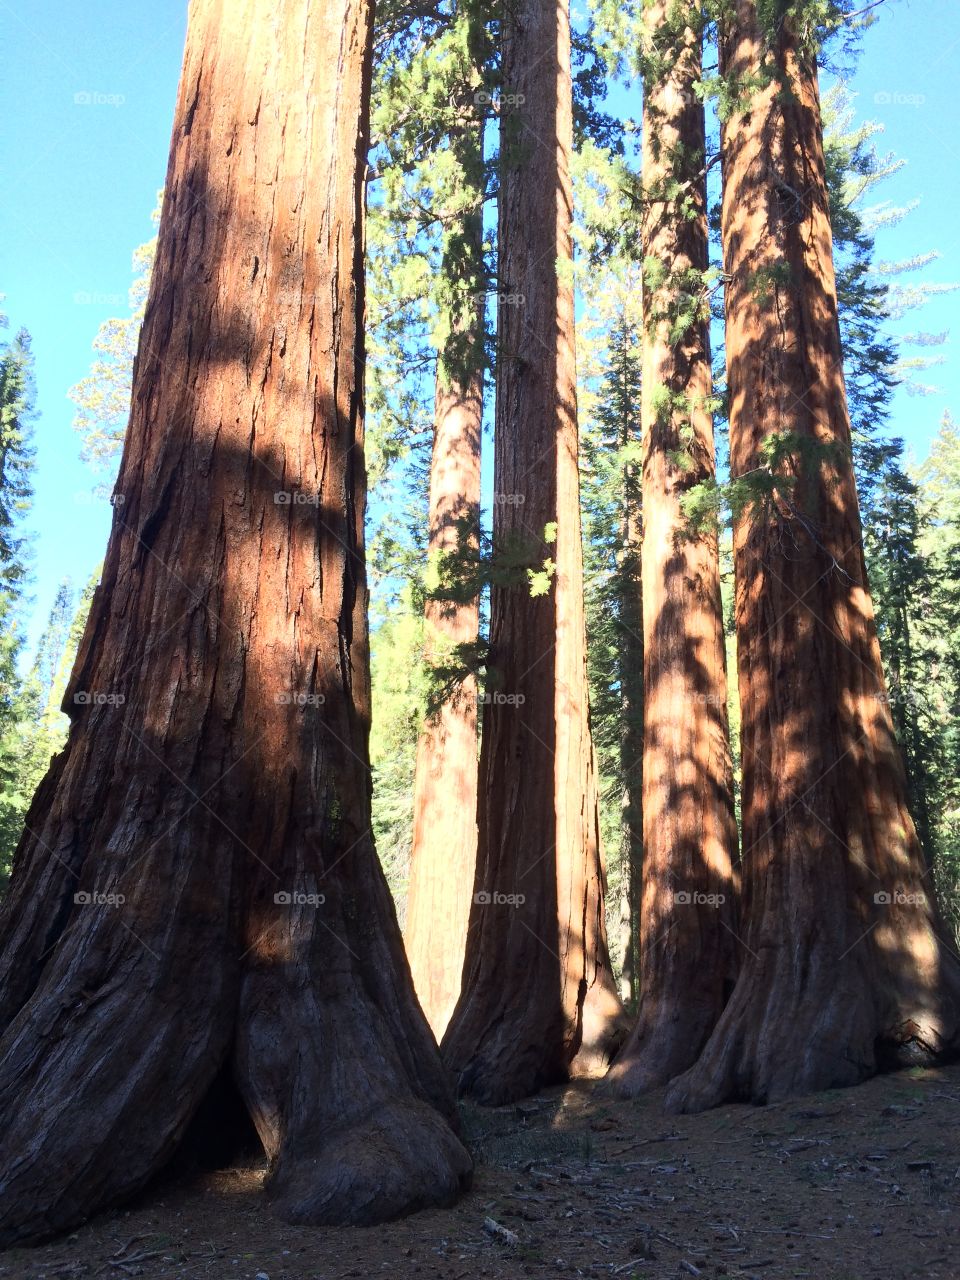 Mariposa Woods Giant Sequoias. Taken in Yosemite National Park's Mariposa Woods in January 2015. Giant Sequoia tree grove. 